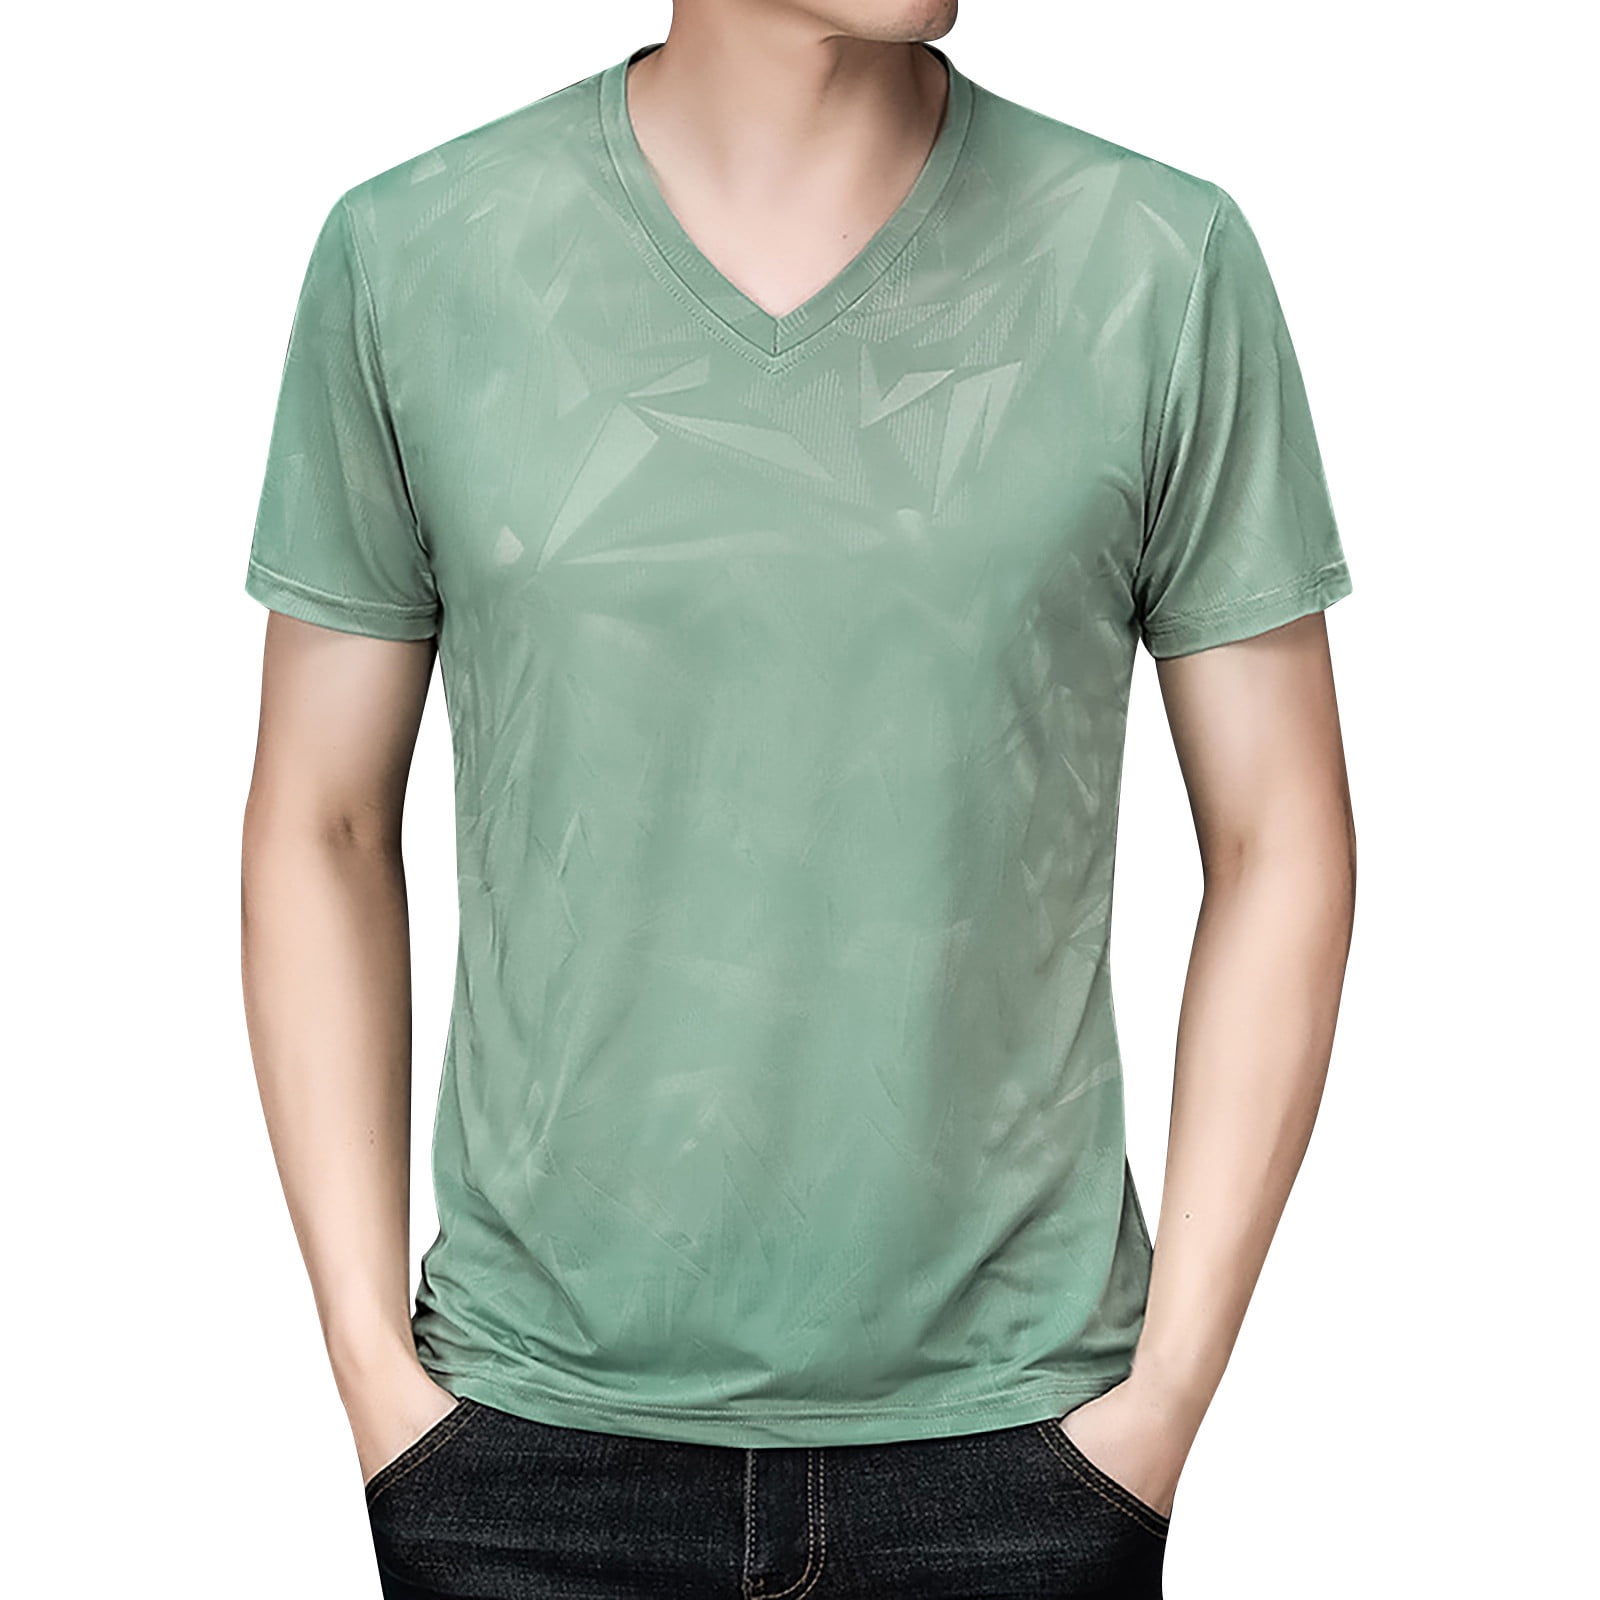 B91xZ Shirts for Men Soft Short Sleeve T Shirts Classic Crew Neck